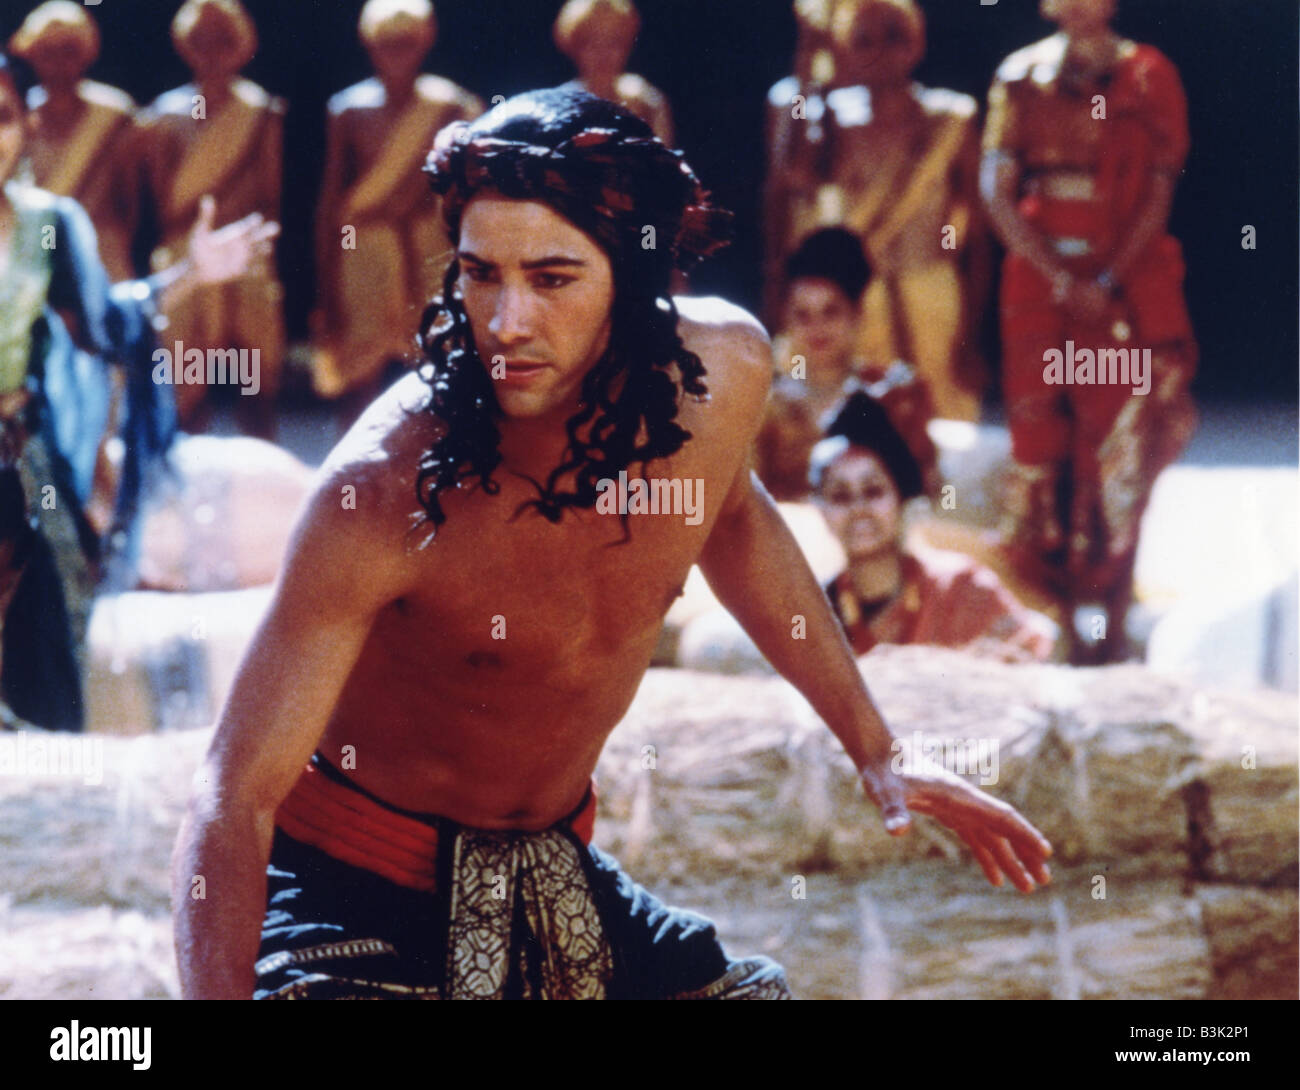 Petit Bouddha 1993 Buena Vista film avec Keanu Reeves Banque D'Images